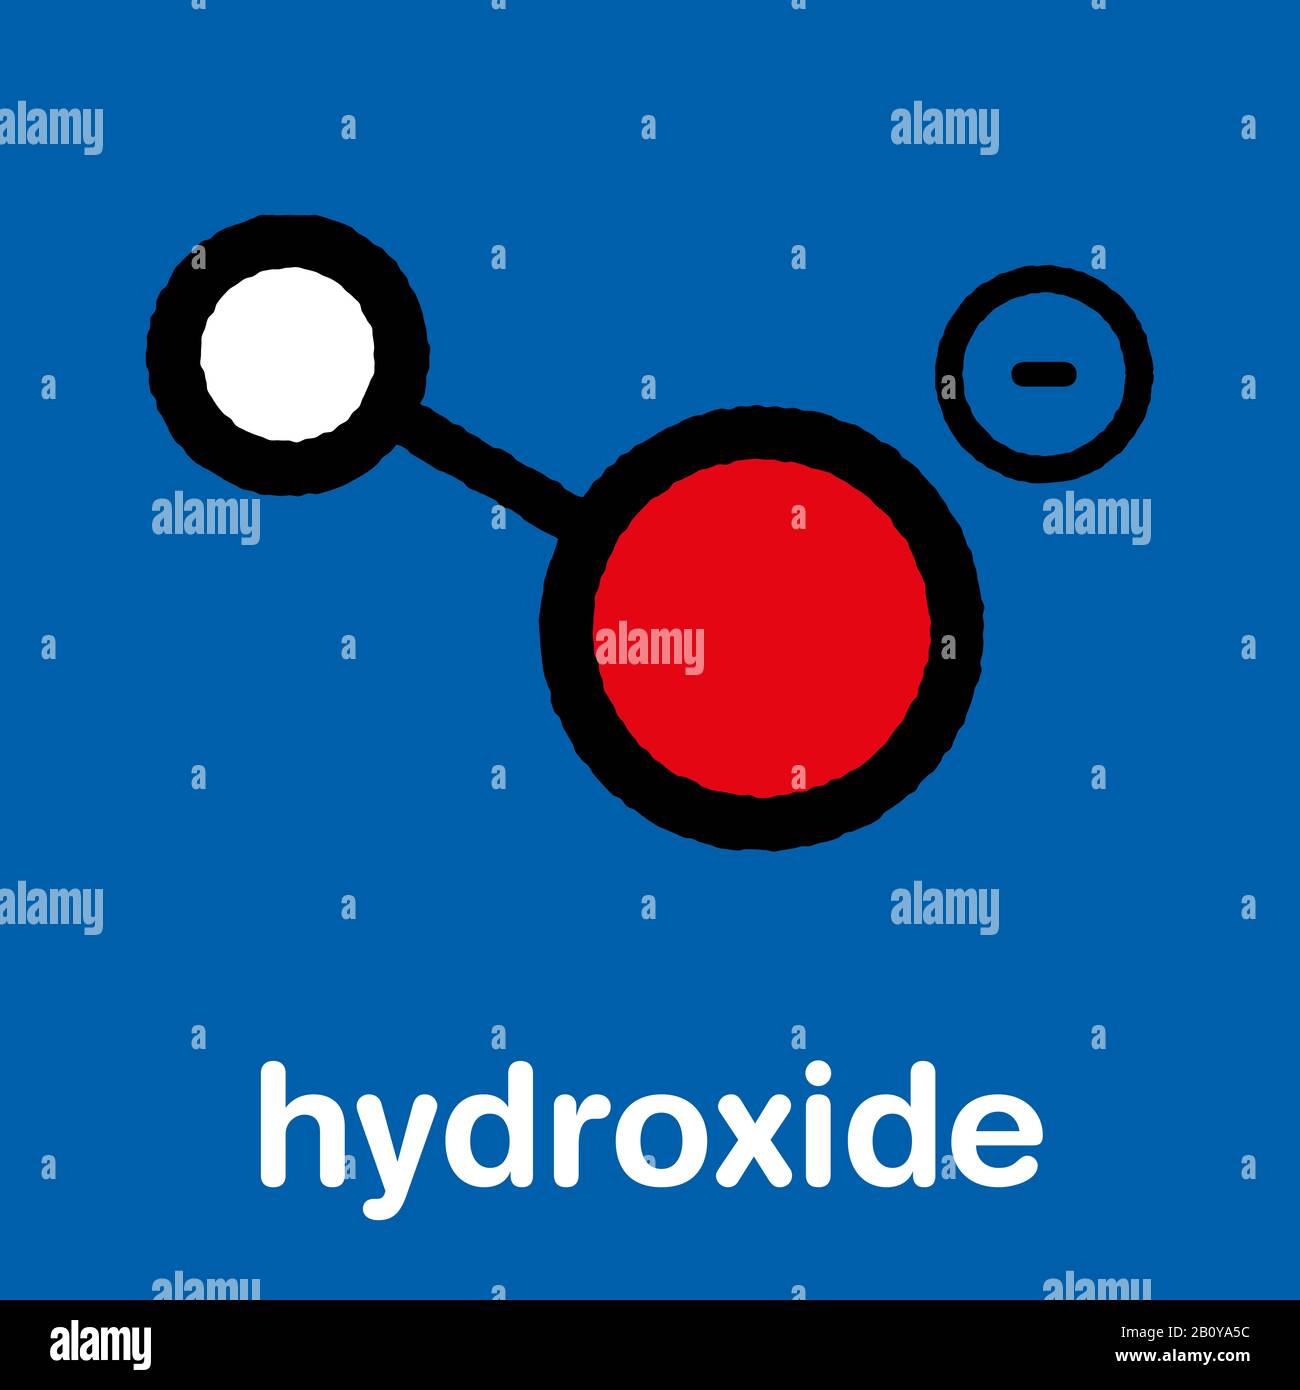 Sodium hydroxide, caustic soda, lye molecule. NaOH is highly